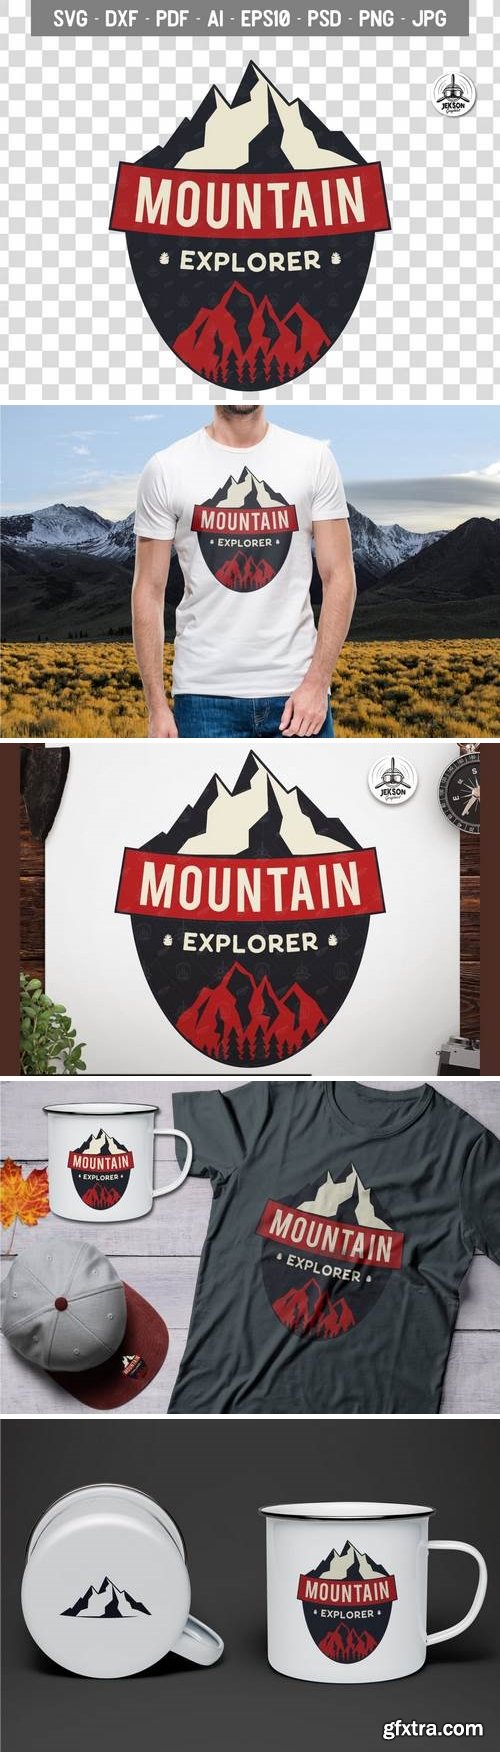 Mountain Explore Badge / Vintage Travel Logo Patch